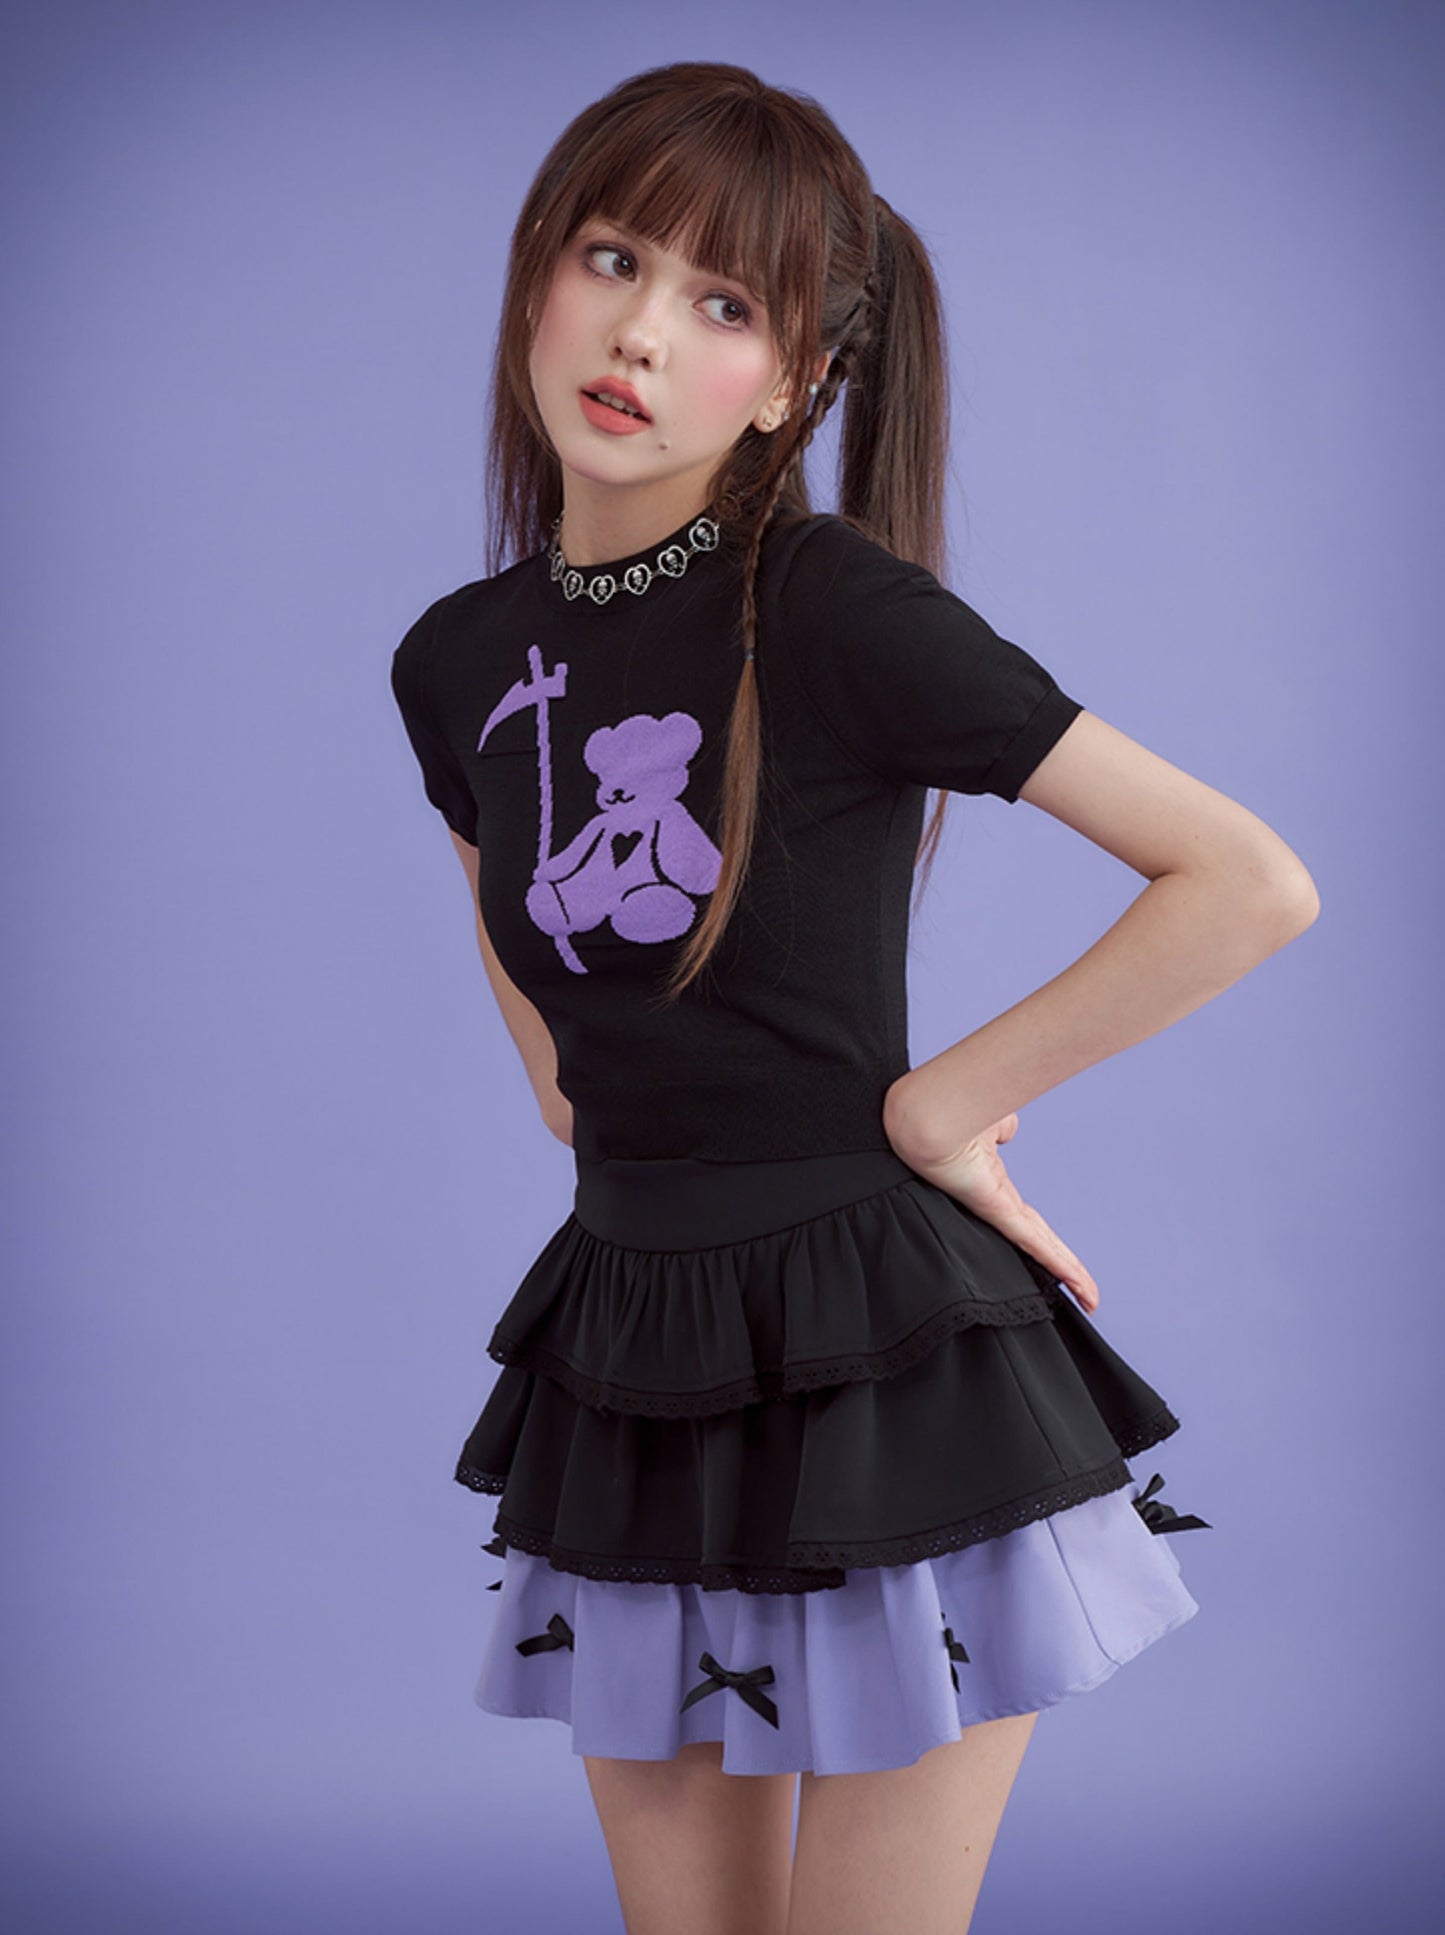 SagiDolls Teenage Fighting Spirit # Bow Meeting # Black Purple Cool Lomi Bad Sweet Dolls Feel Cake Skirt Shows Height